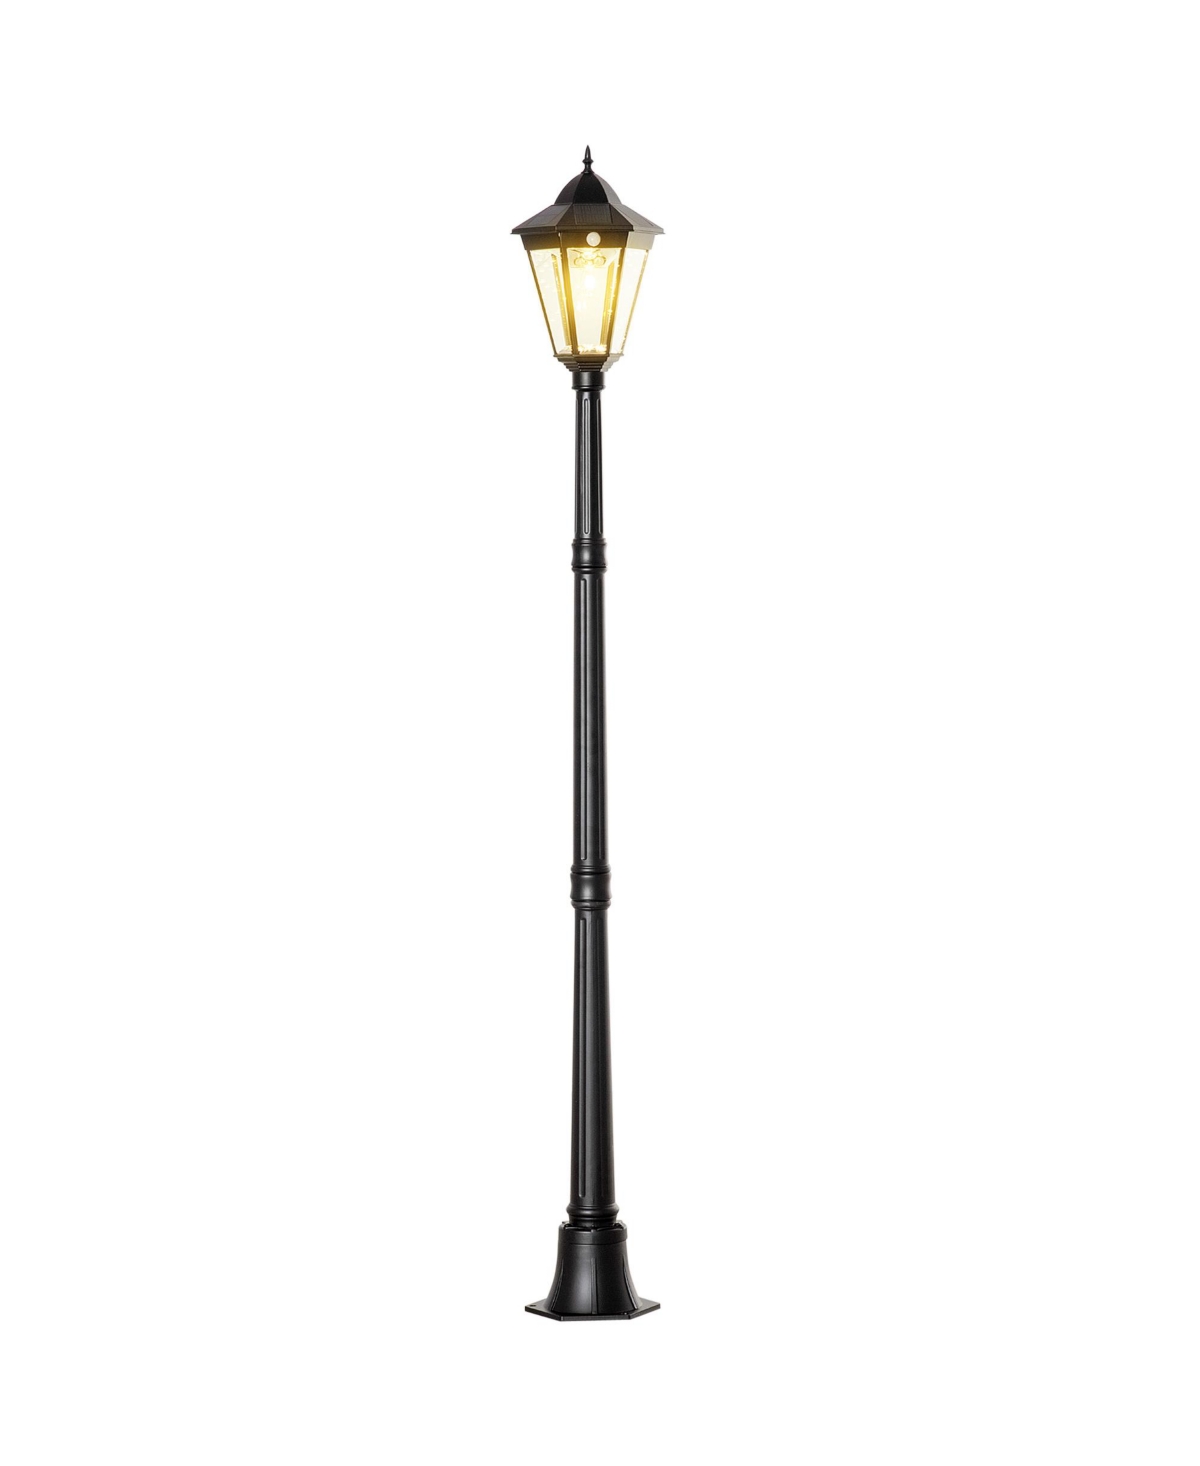 78.75" Solar Lamp Post Light, Waterproof Aluminum Outdoor Vintage Street Lamp, Motion Activated Sensor Pir, Adjustable Brightness, for Garden